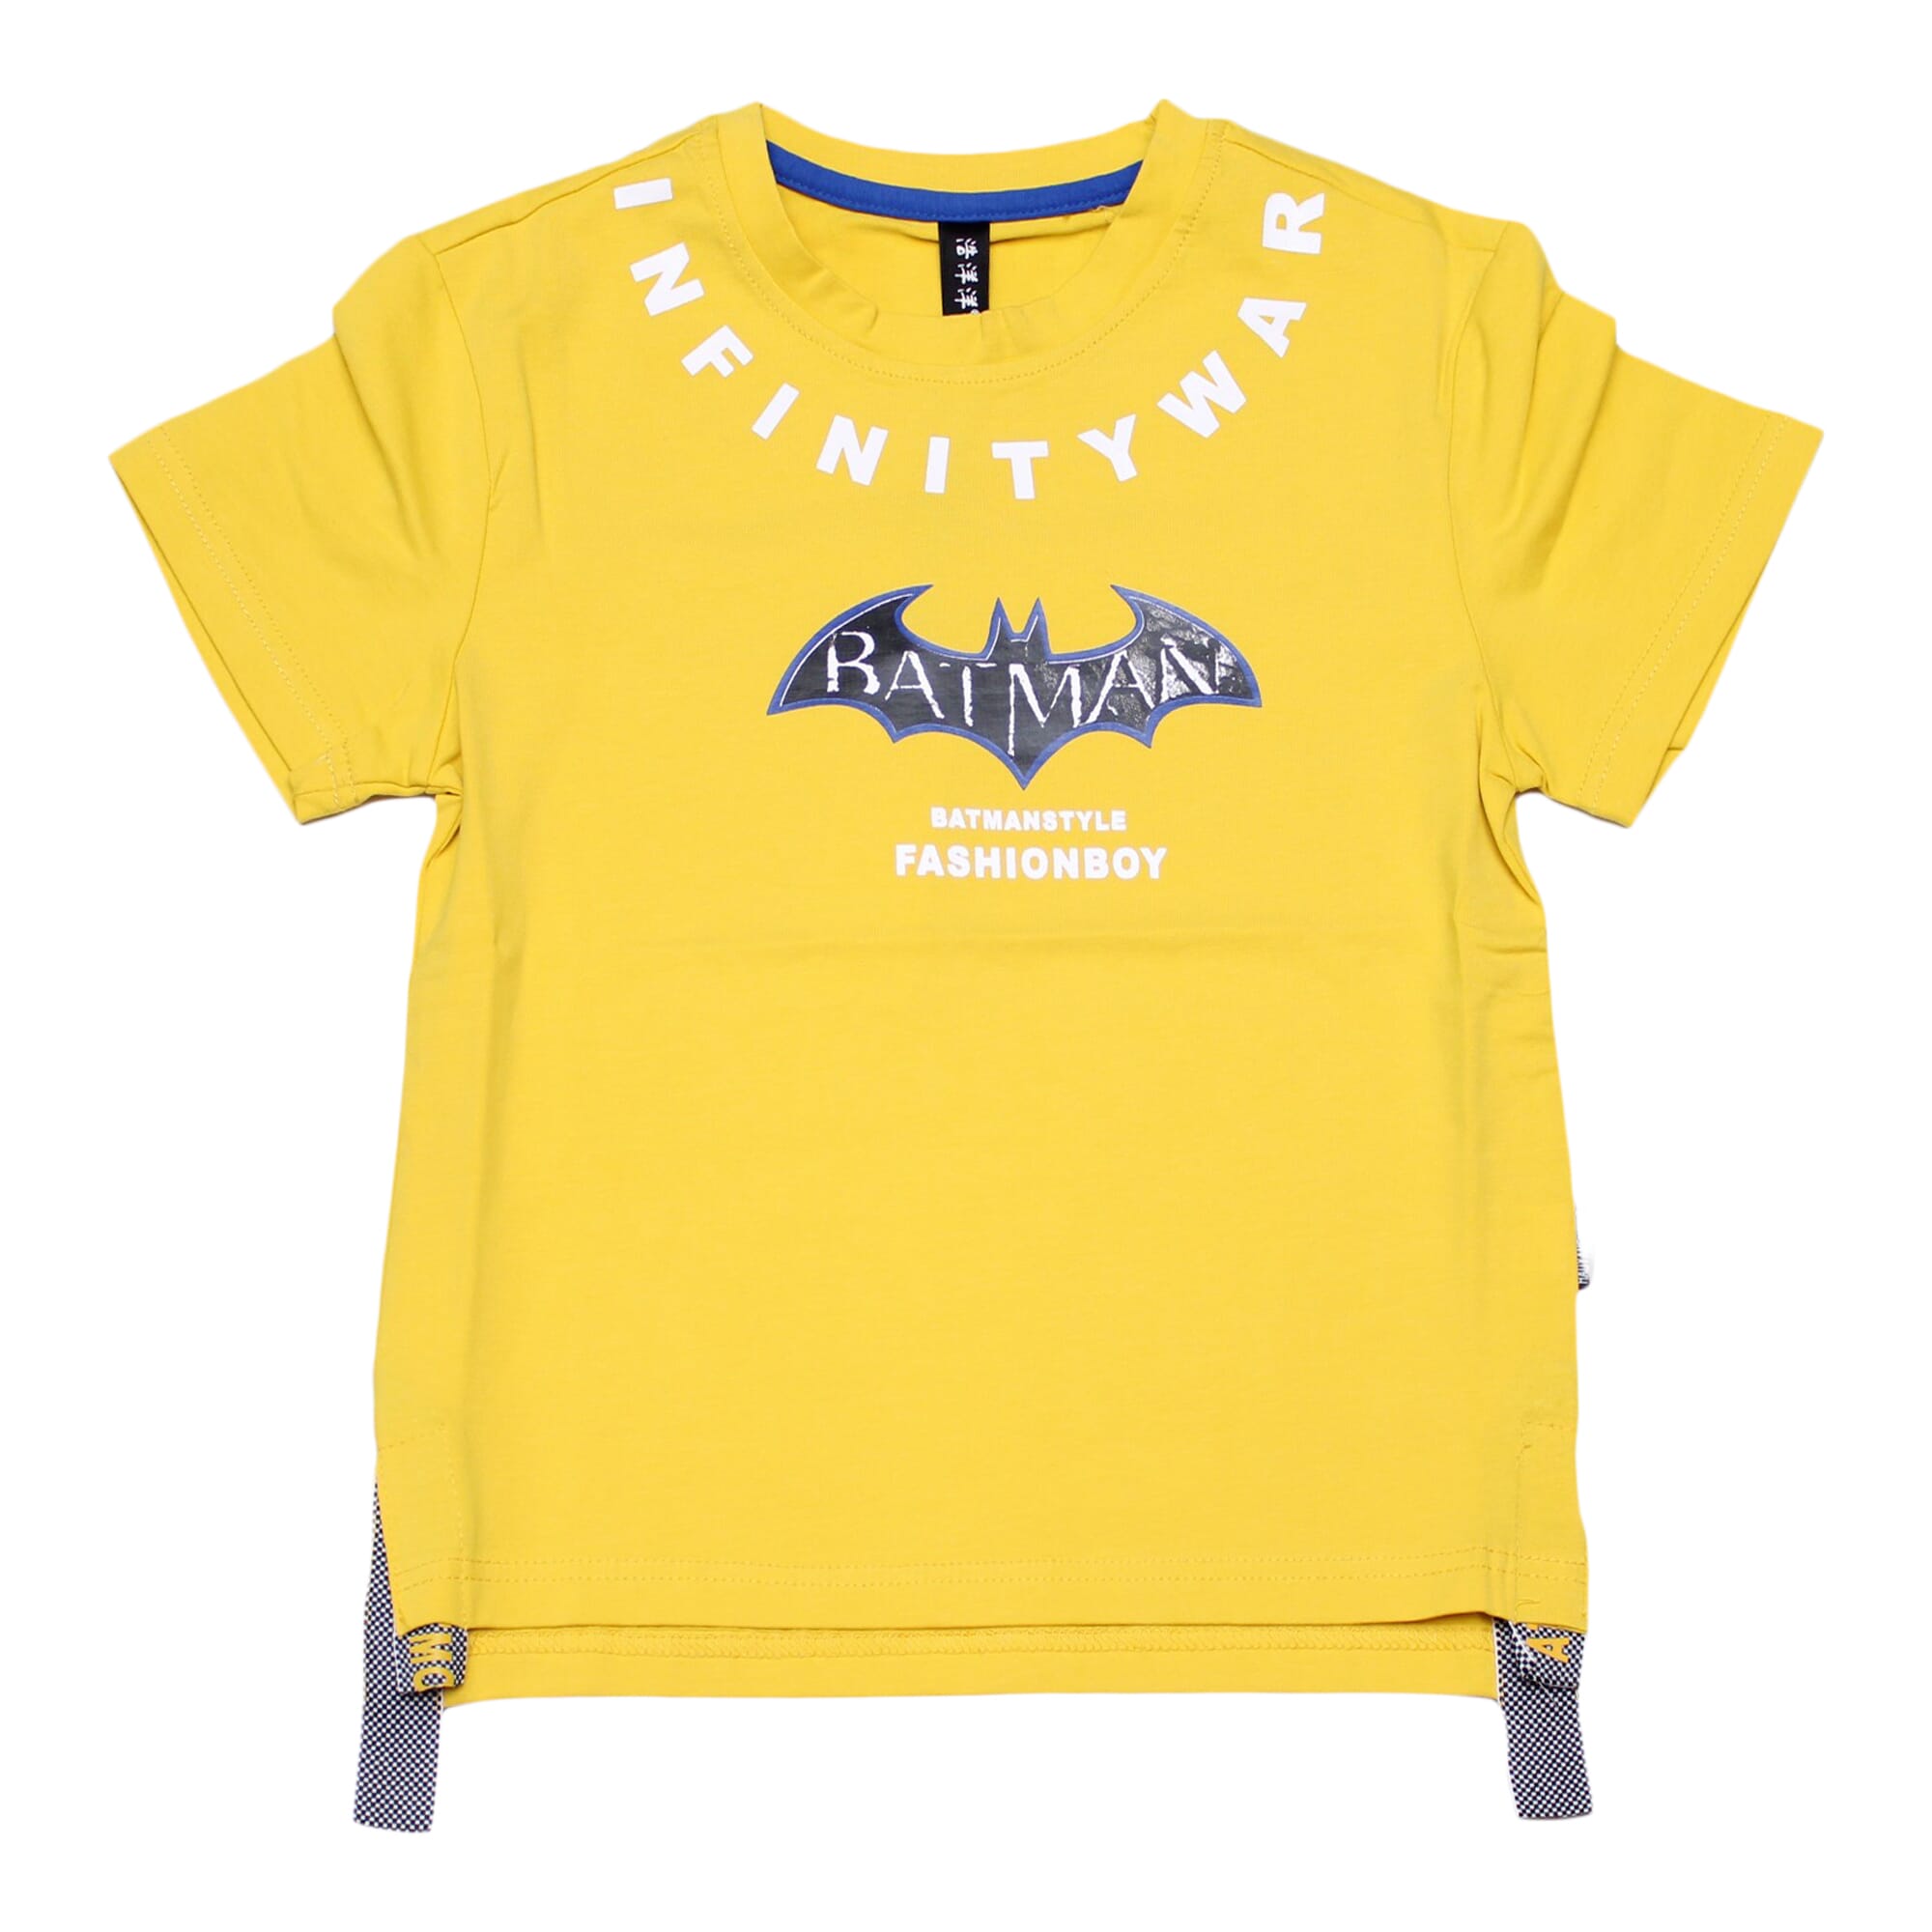 Batman printed t-shirt